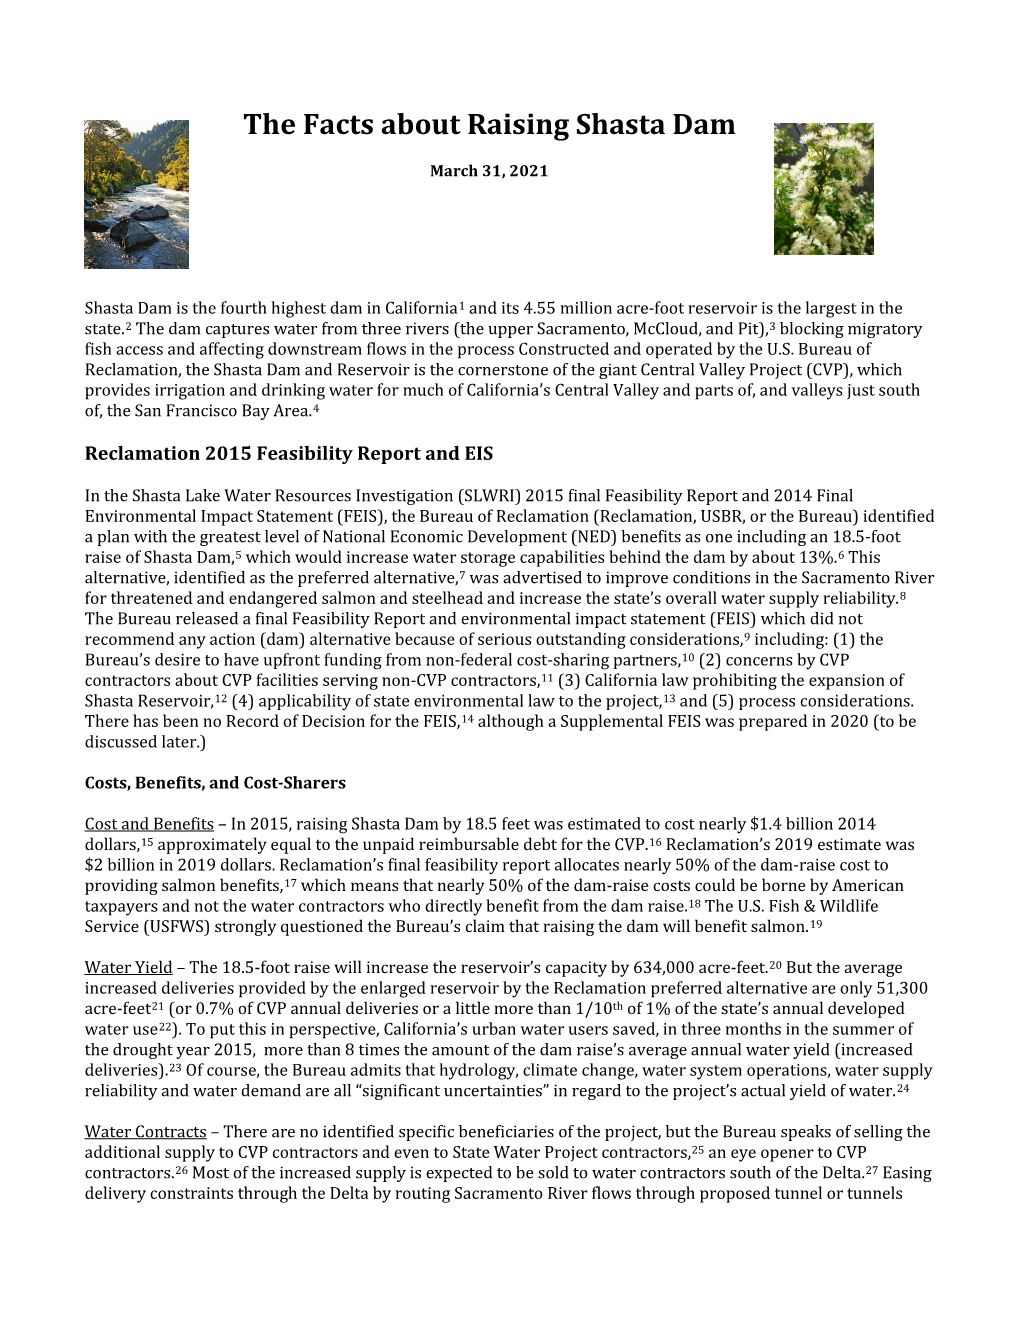 Shasta Dam Raise Referenced Fact Sheet